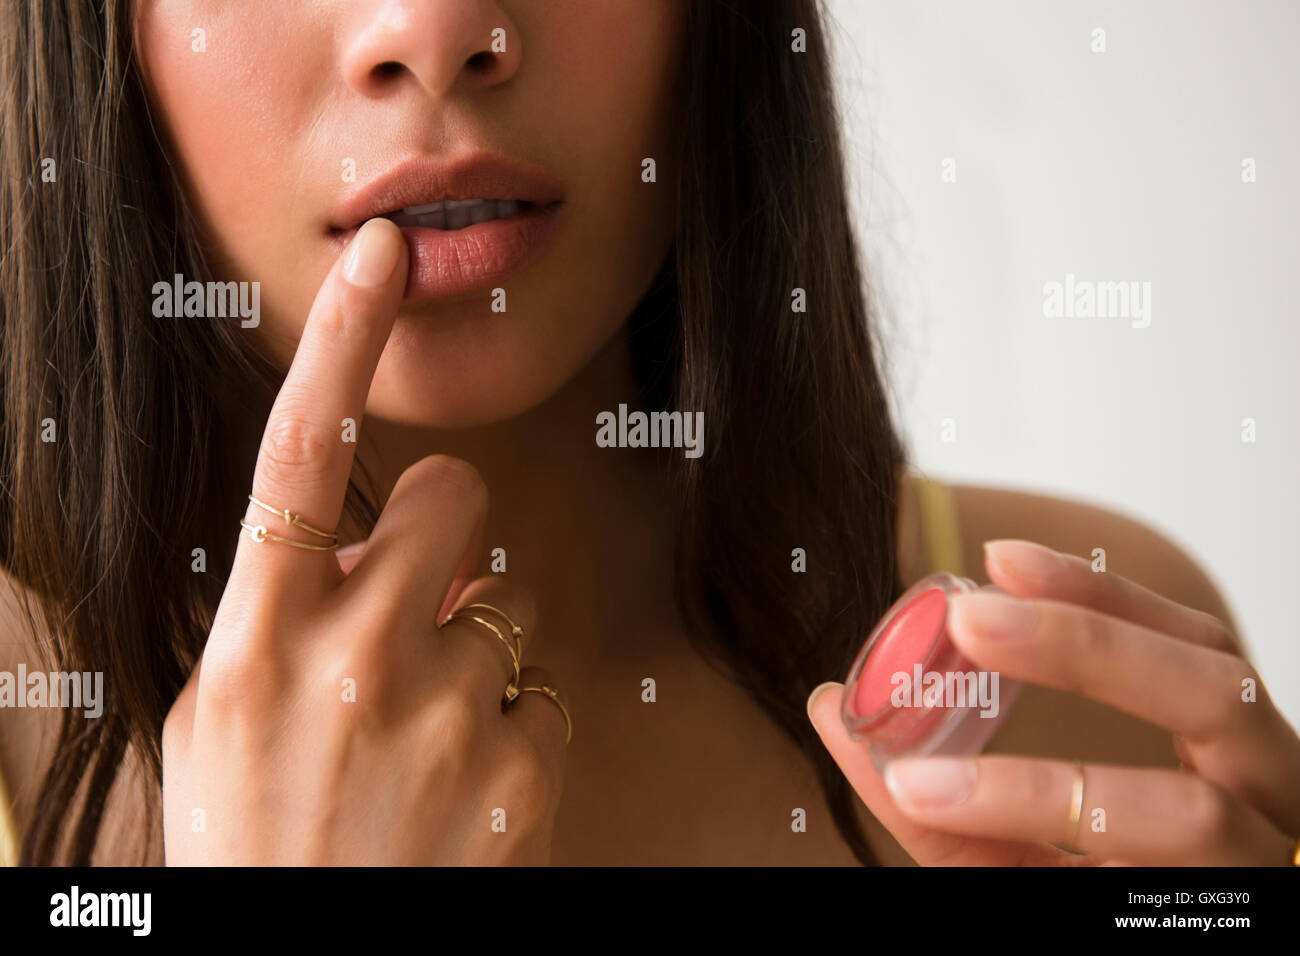 Hispanic woman applying lip gloss Stock Photo